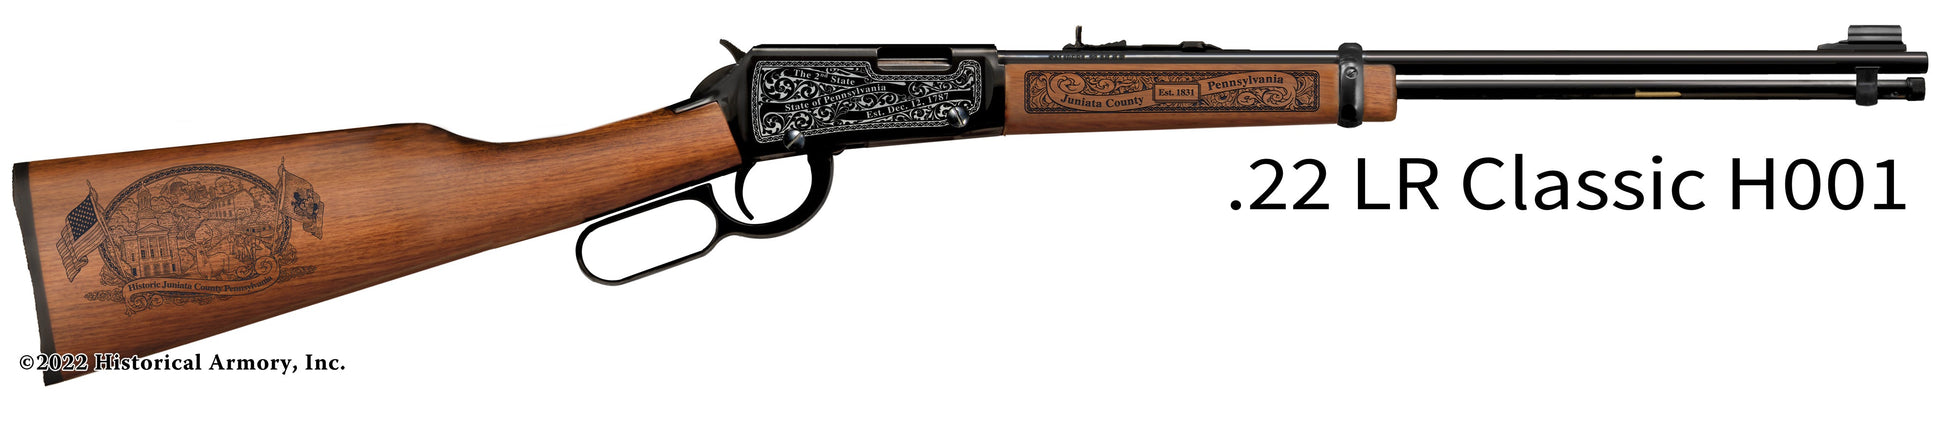 Juniata County Pennsylvania Engraved Henry H001 Rifle